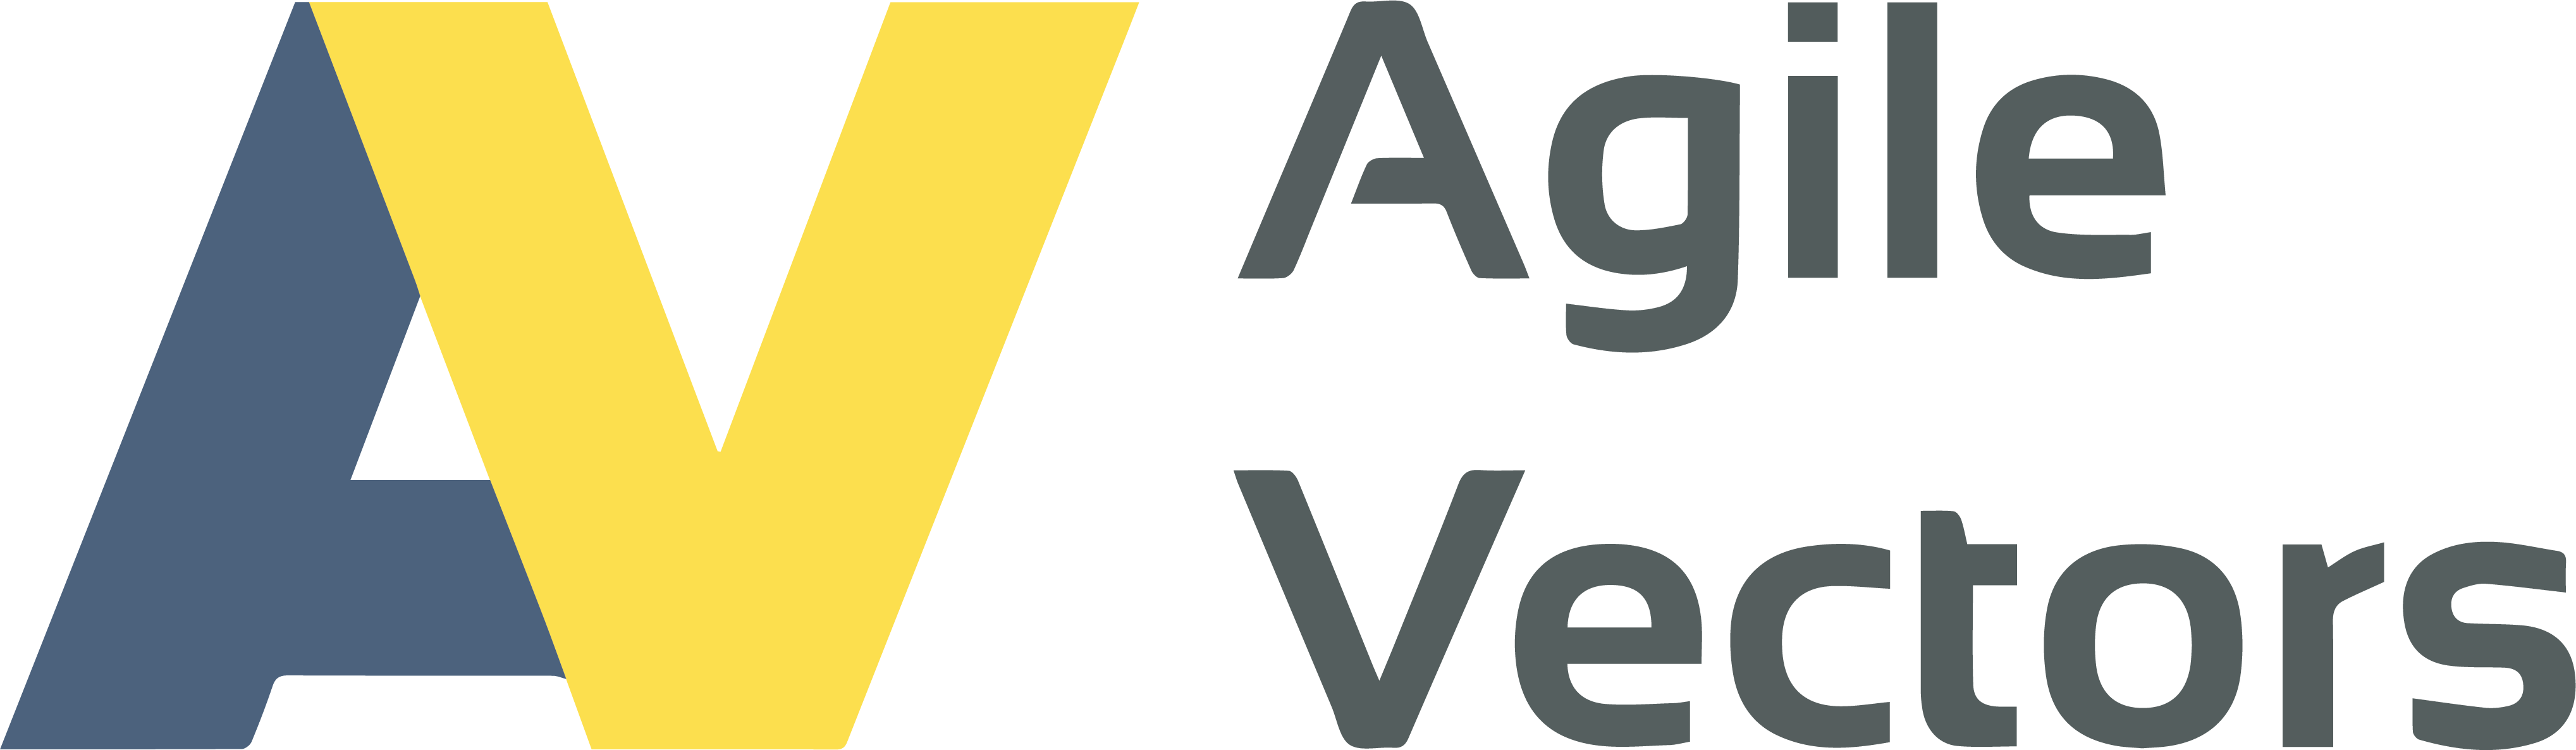 Agile Vectors Logo